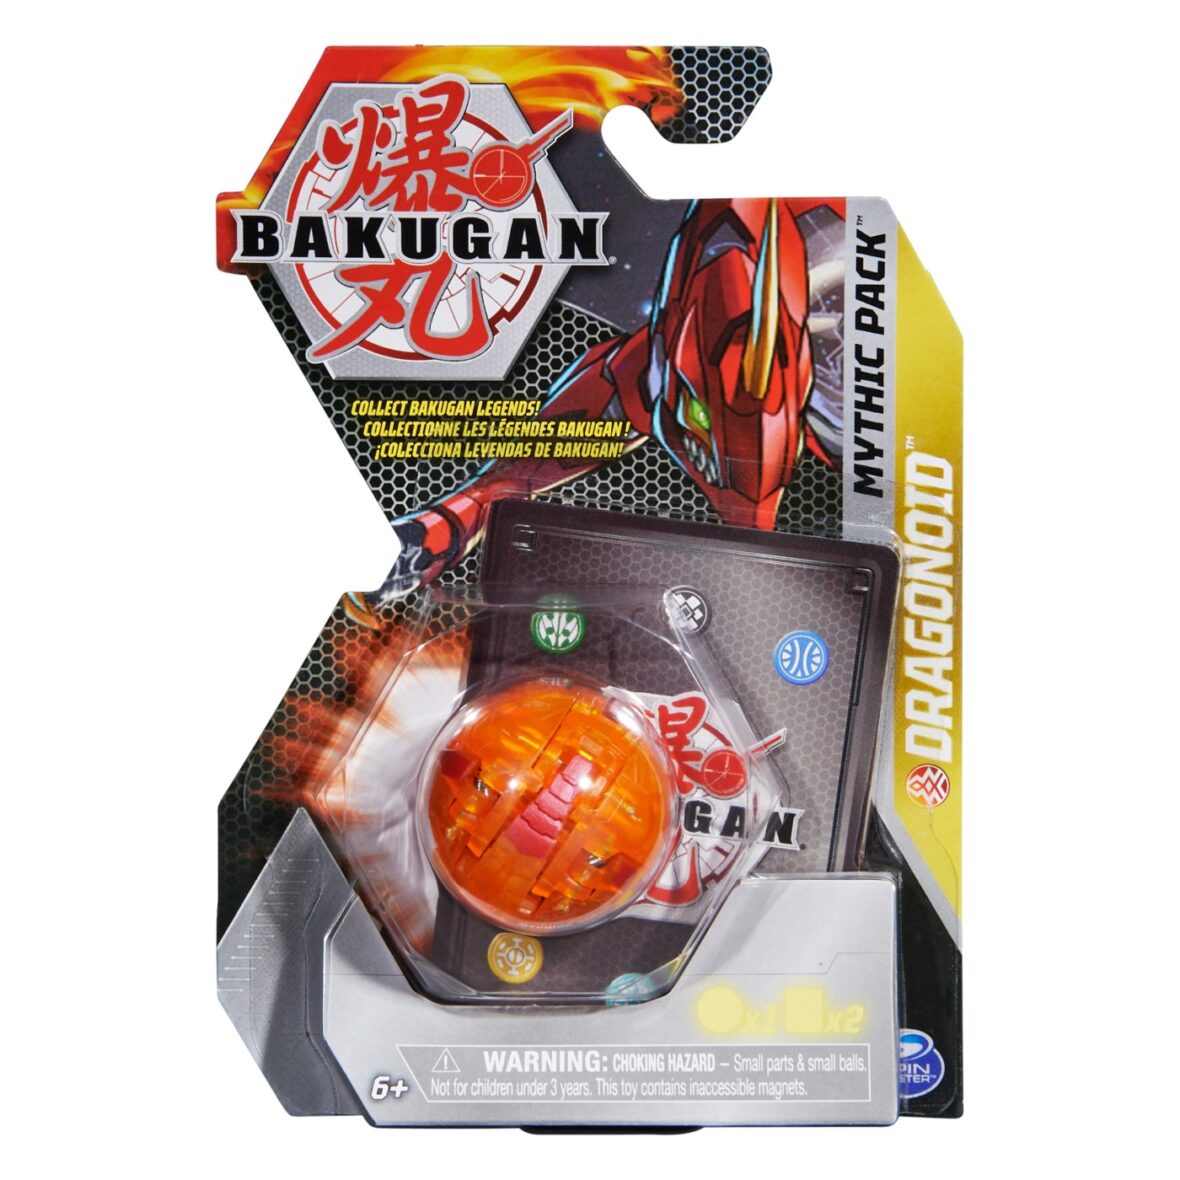 Bakugan Pachet Legendar Dragonoid Portocaliu